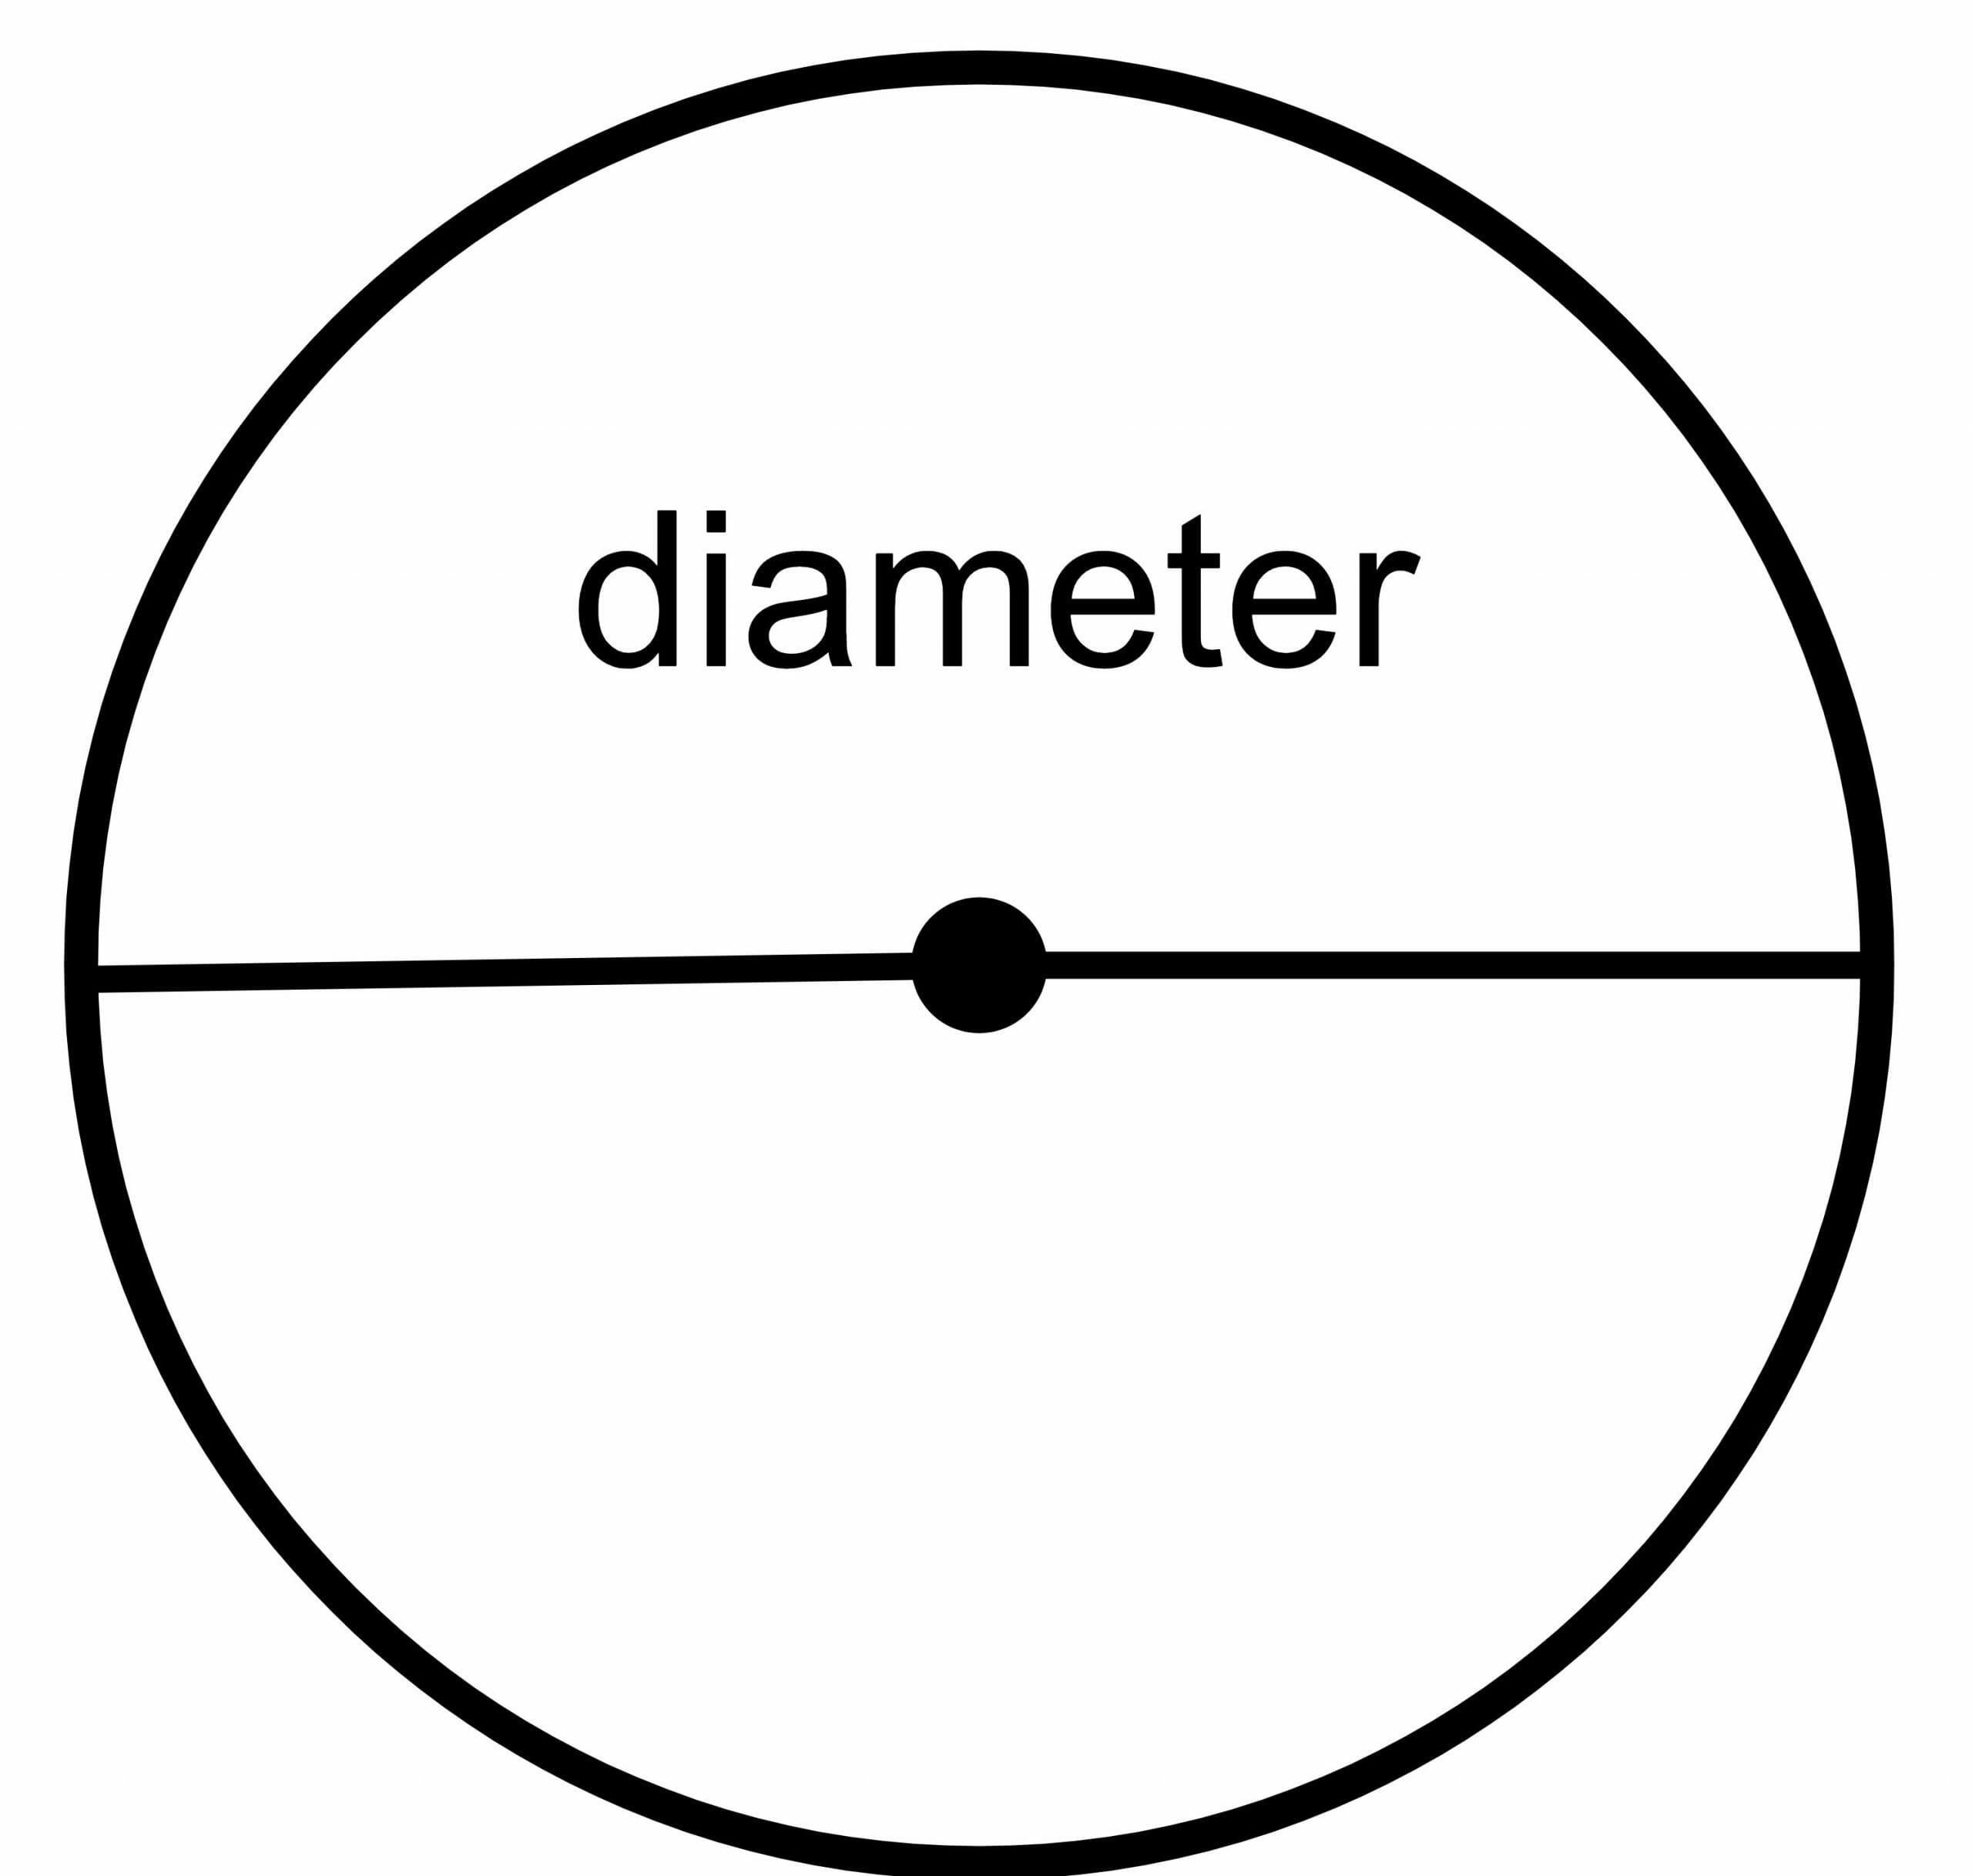 Diameter of a circle